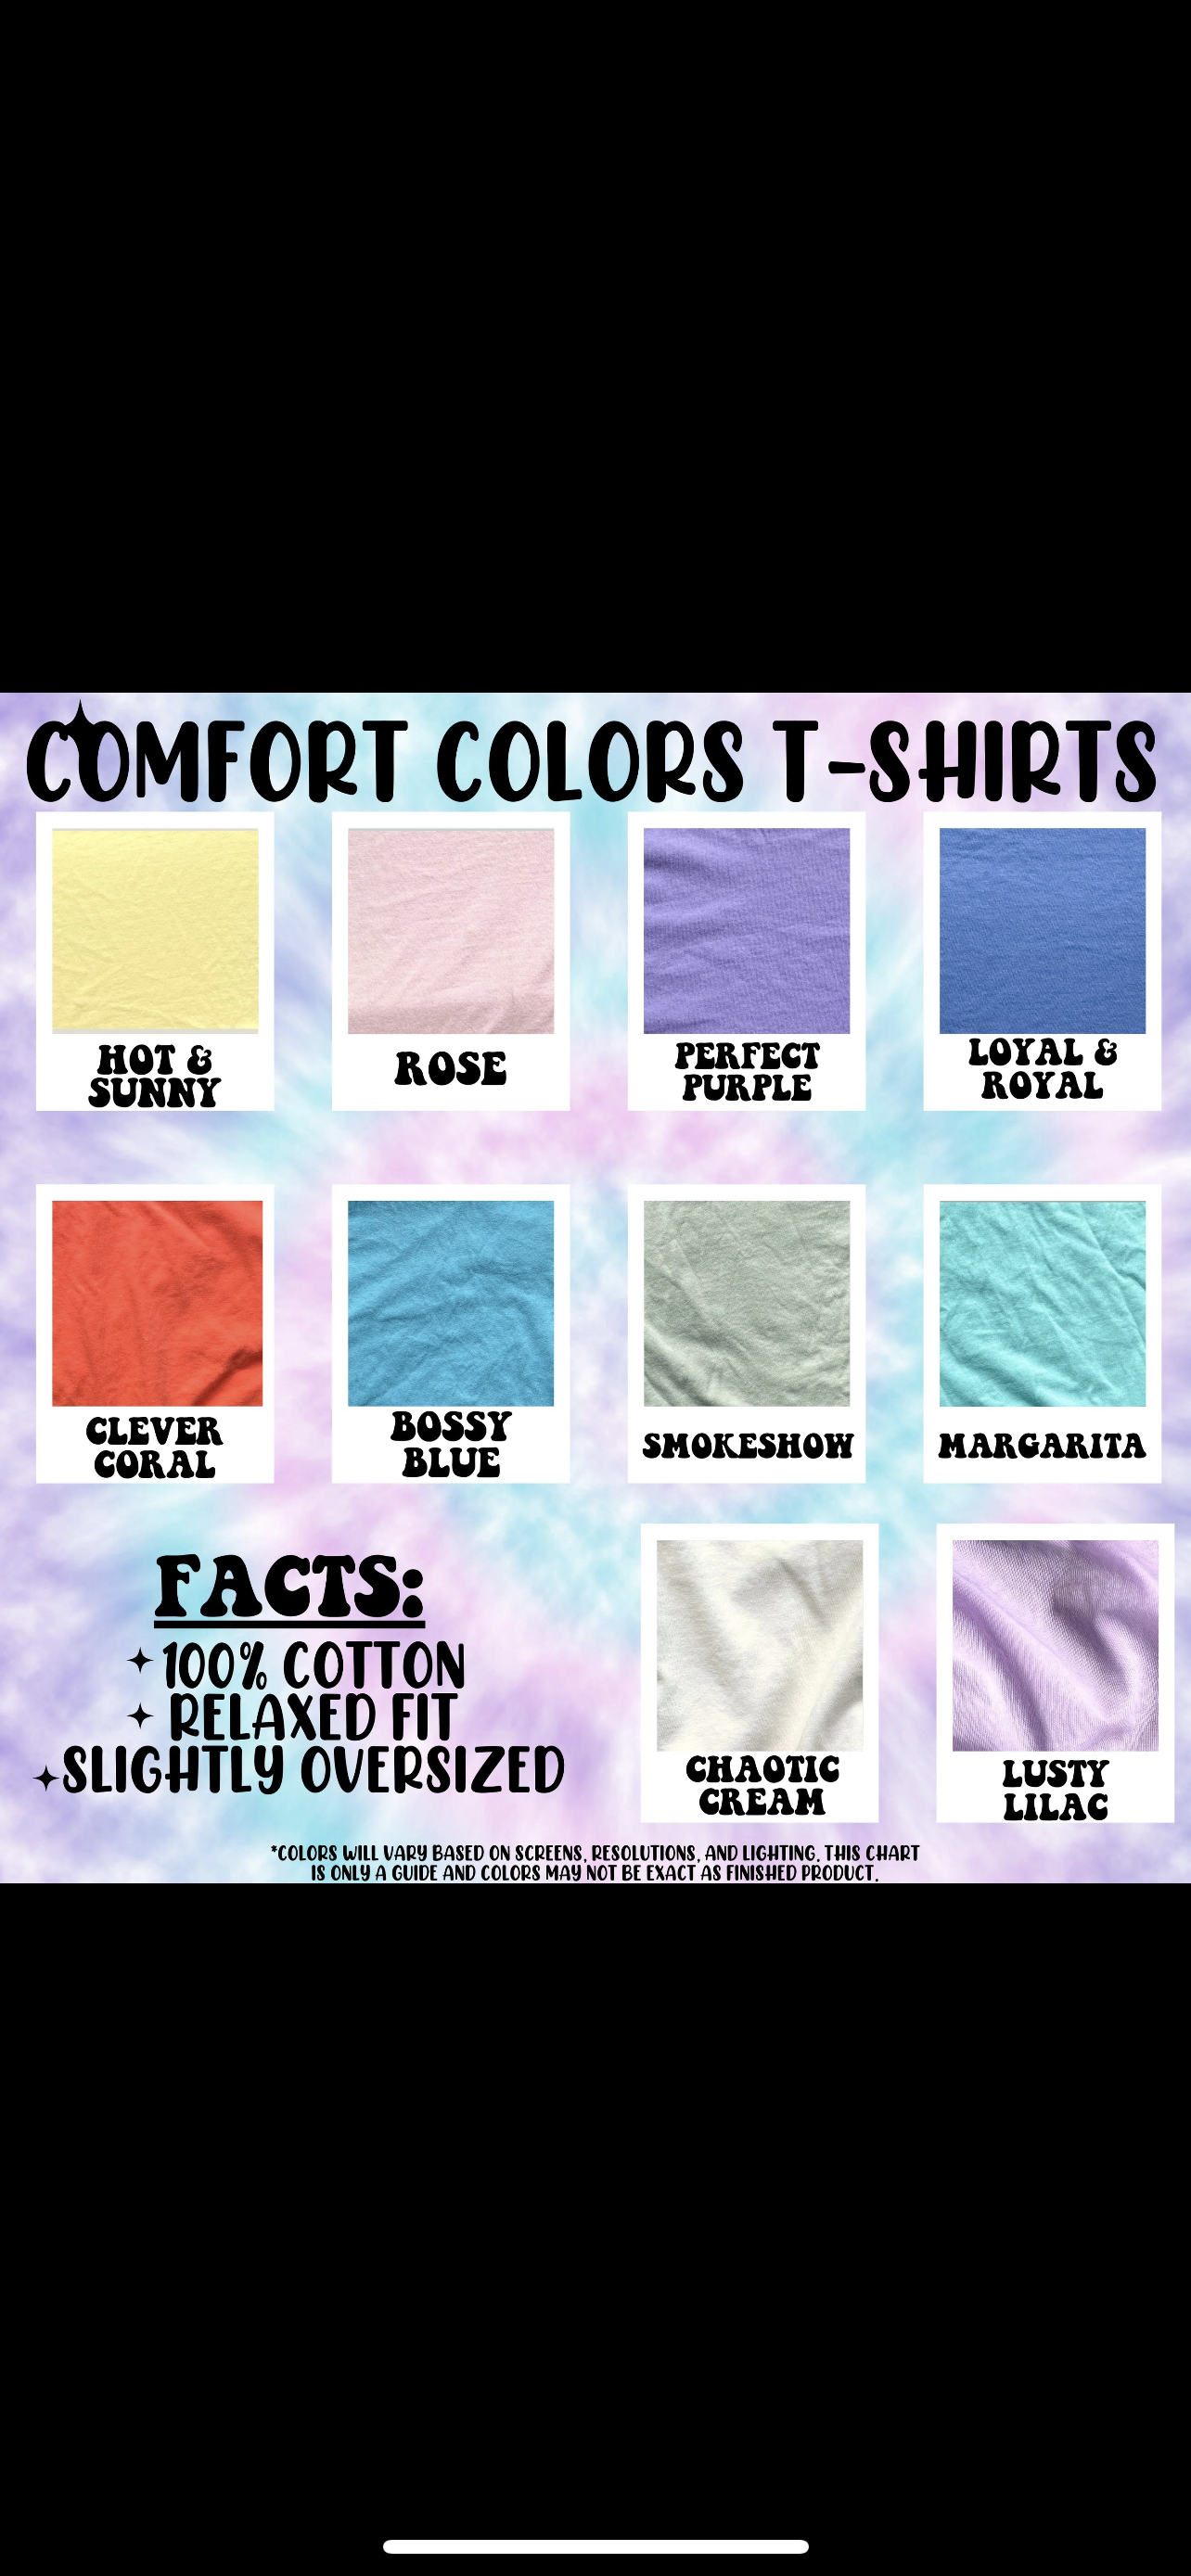 In my spooky bitch era Comfort Colors T-shirt